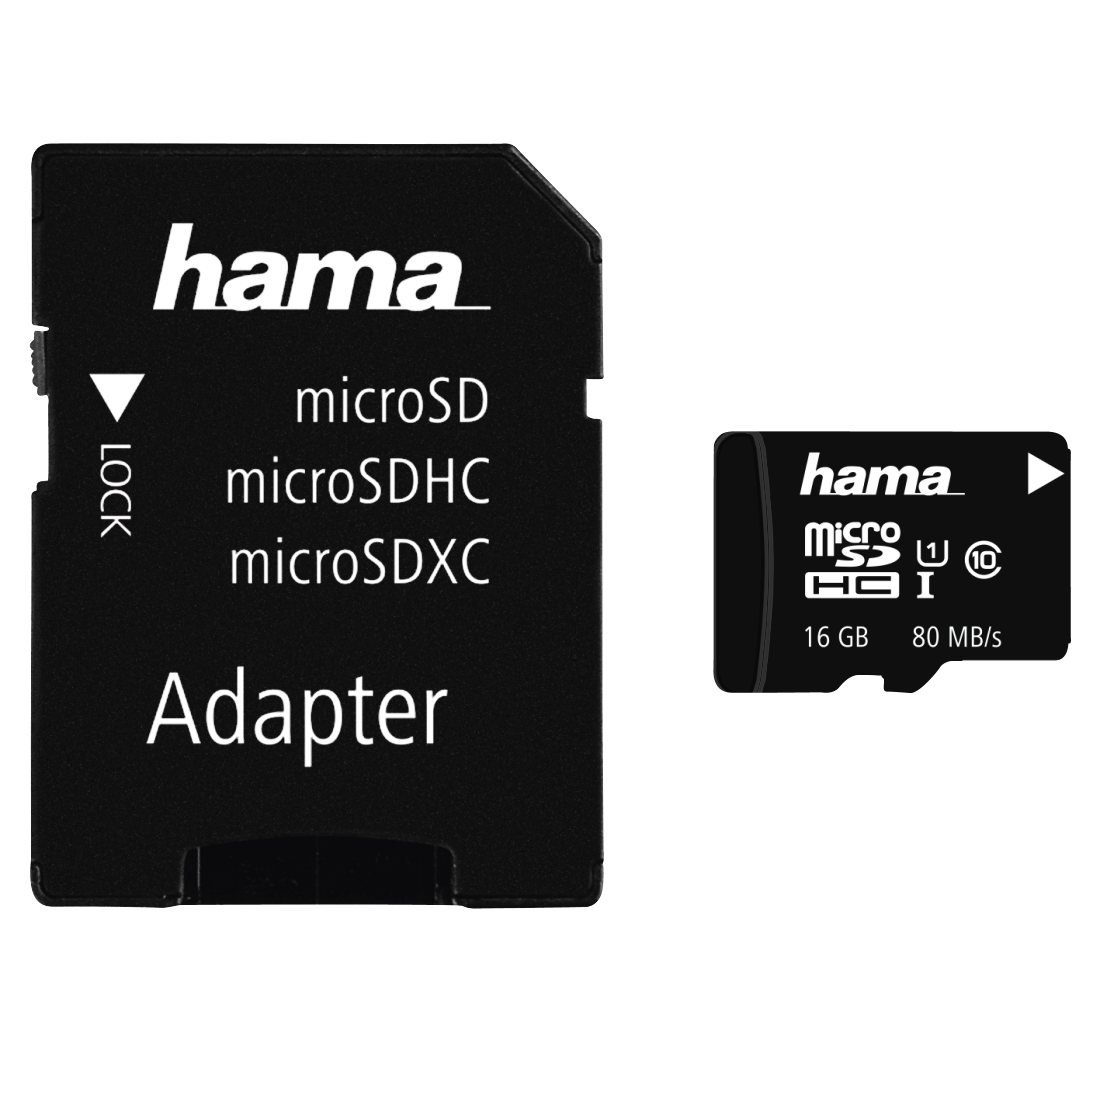 You Recently Viewed Hama 16GB Class 10 microSDHC, UHS-I 80MBs Image